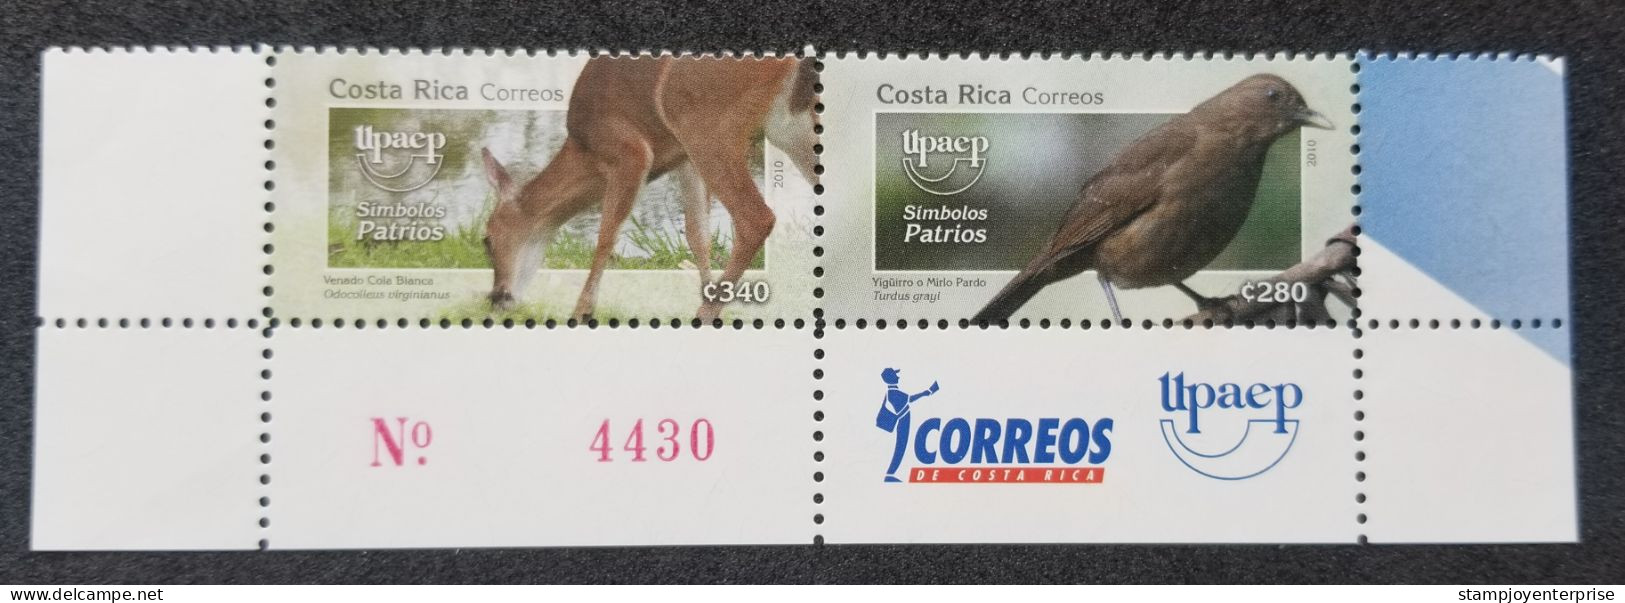 Costa Rica America State Symbols 2010 Deer Bird (stamp Plate) MNH - Costa Rica